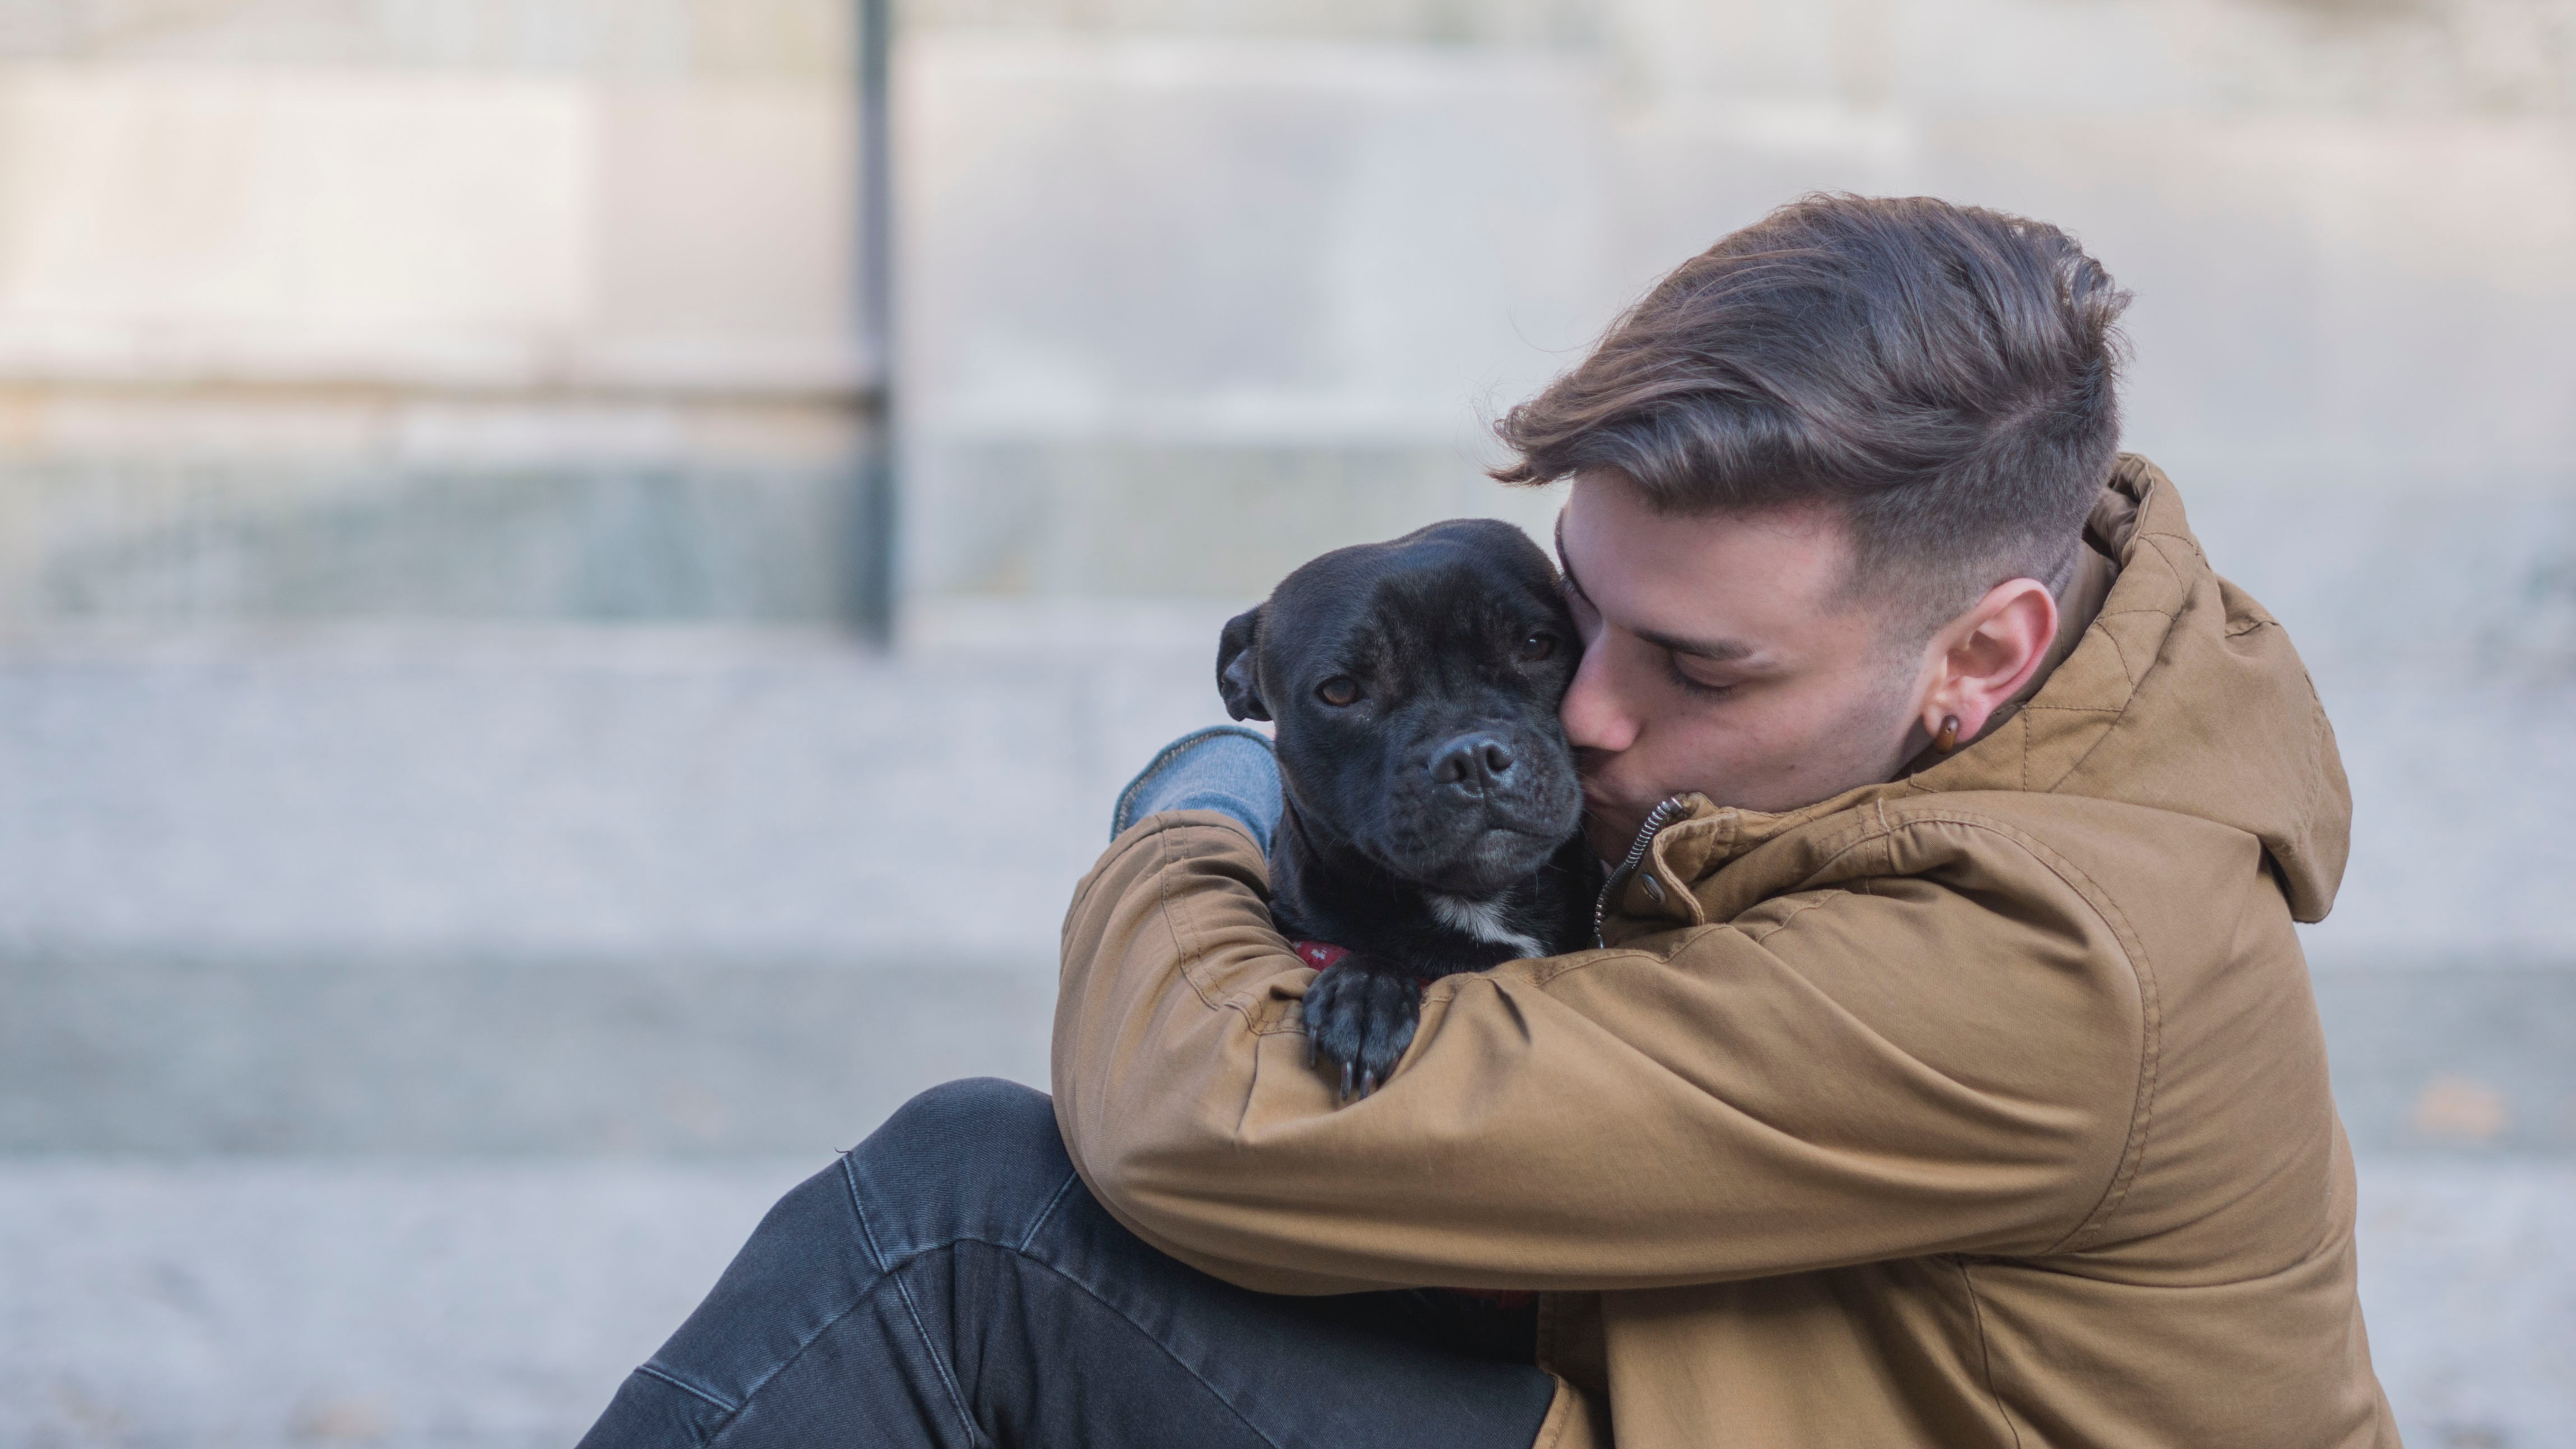 Memorial Sayings For Loss Of Pet: Honoring Unconditional Love